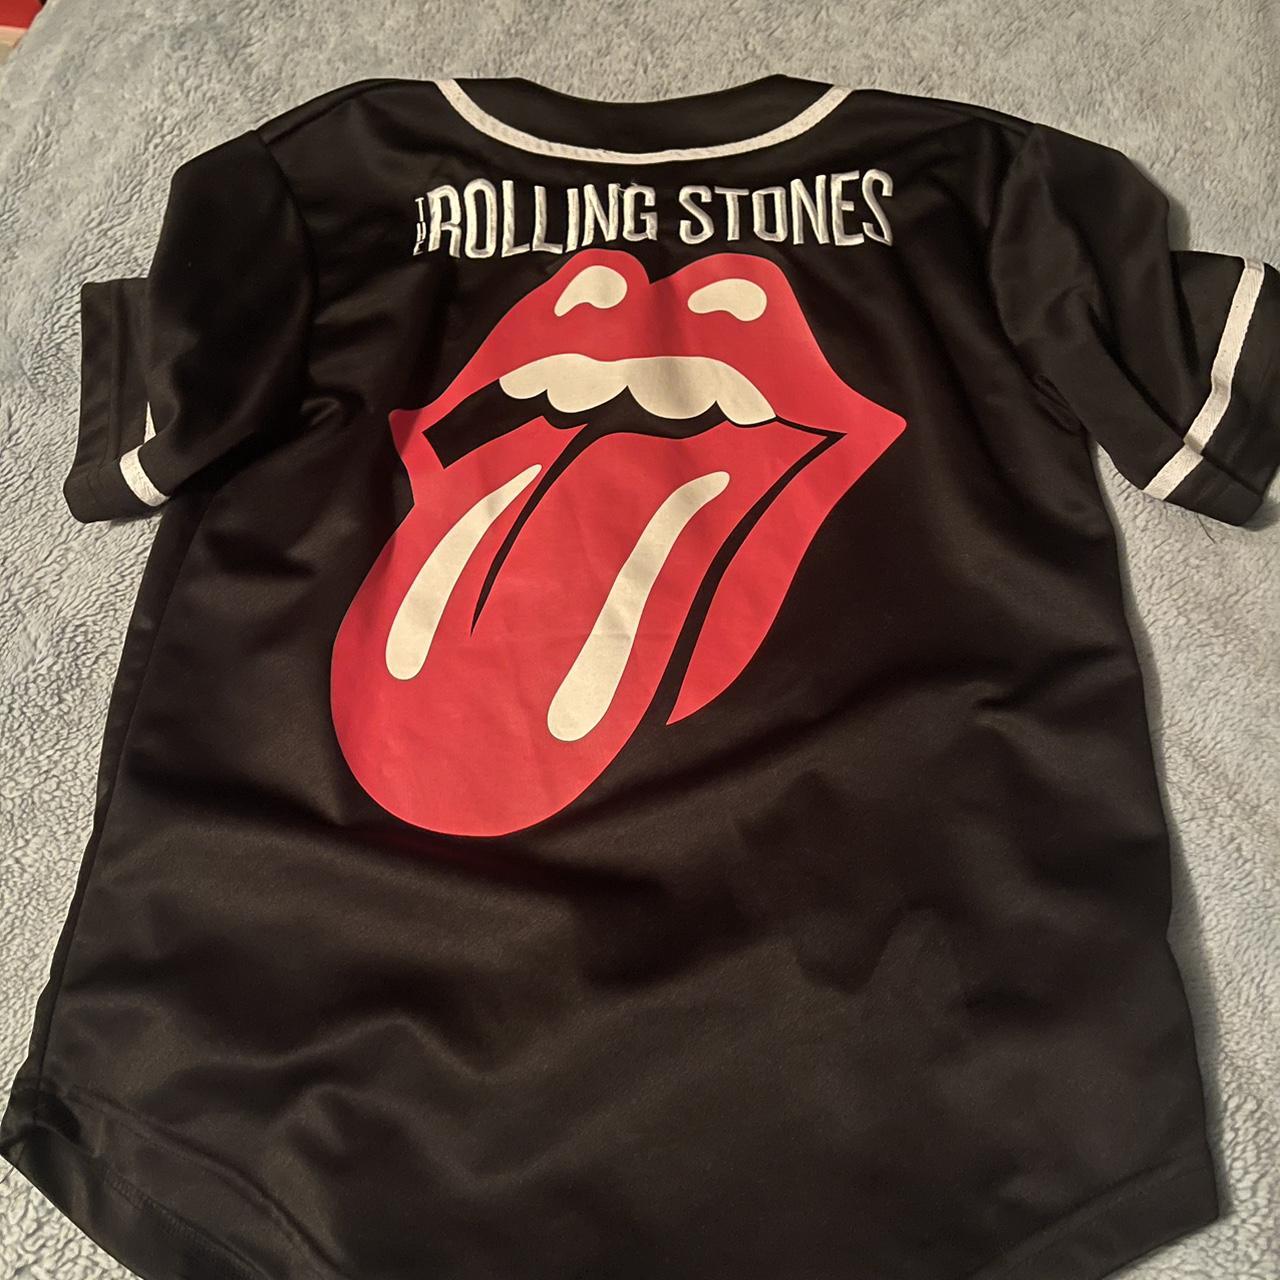 Rolling Stones 14 Tokyo Tan Button Down Baseball Jersey